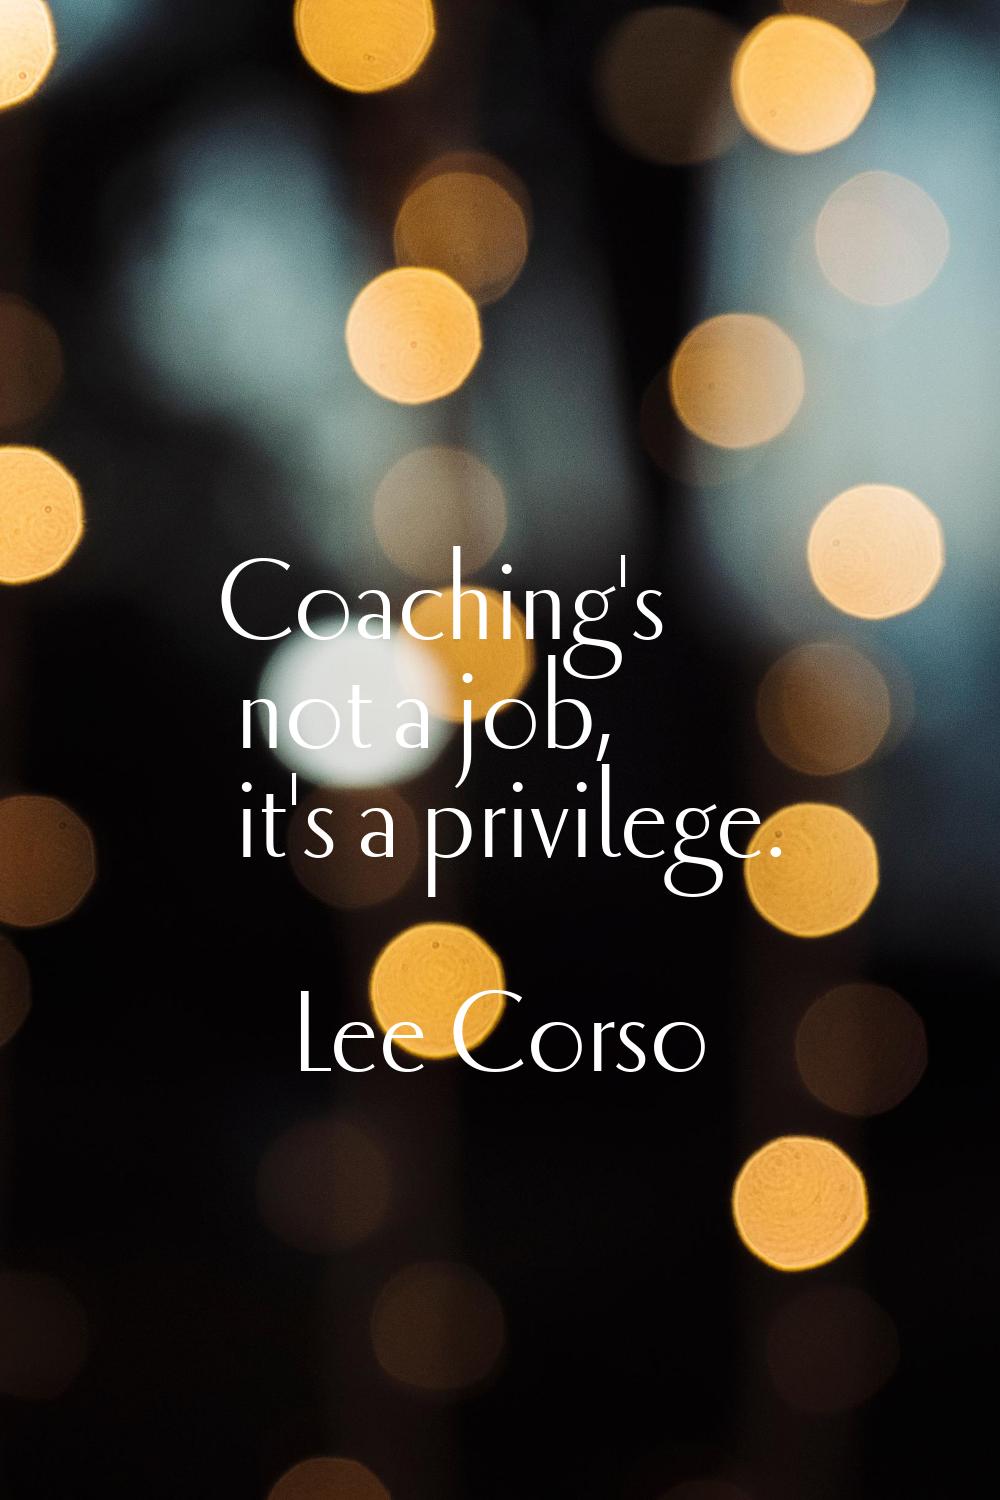 Coaching's not a job, it's a privilege.